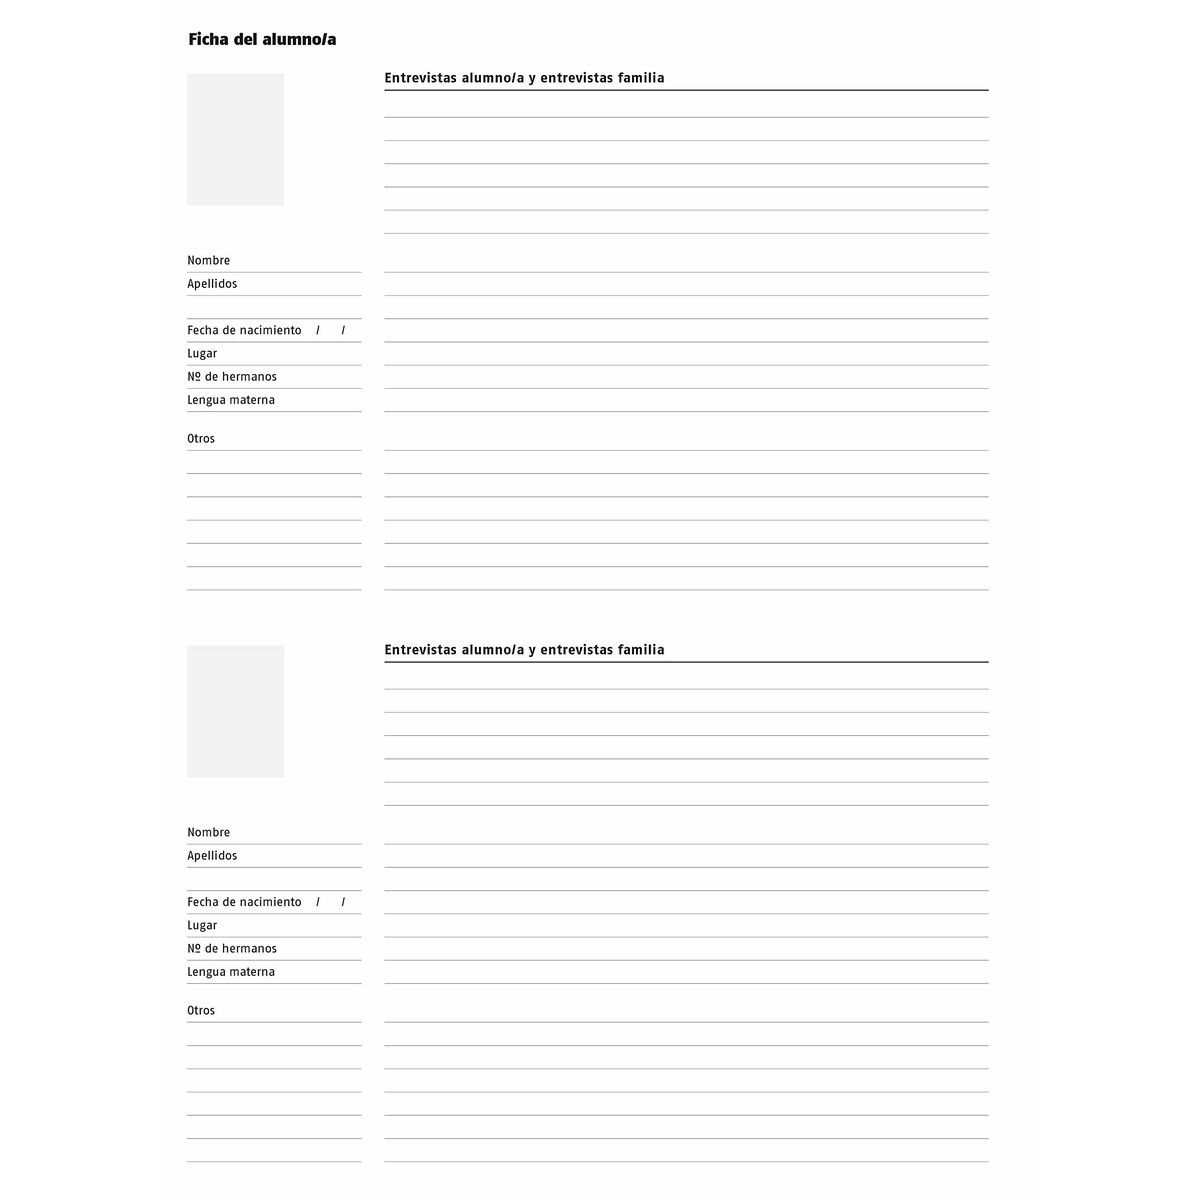 Notebook Additio TRIPLEX (22,5 x 31 cm)